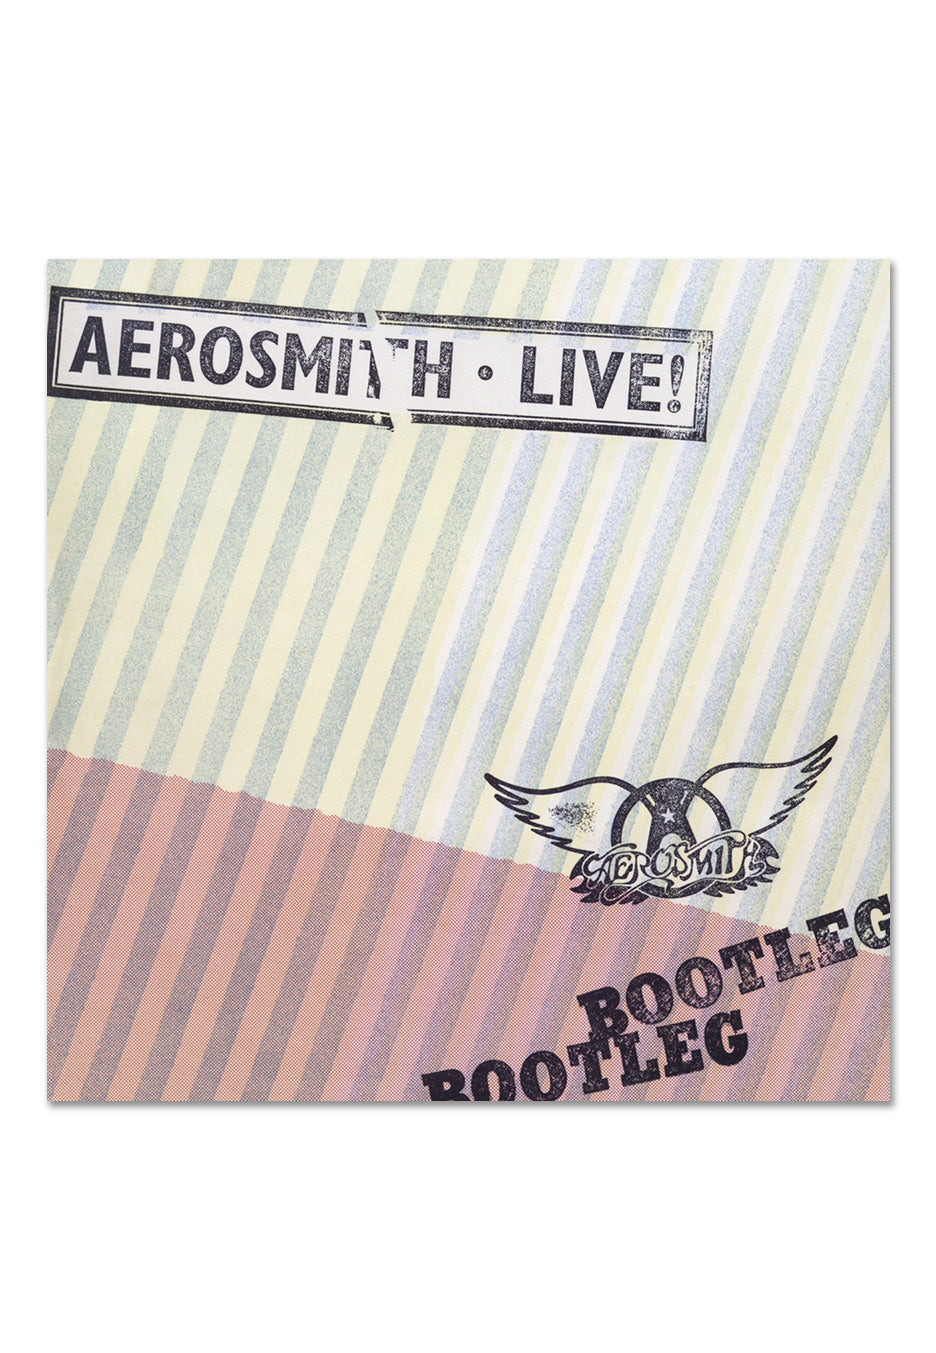 Aerosmith - Live! Bootleg (2023 Reissue) - 2 Vinyl